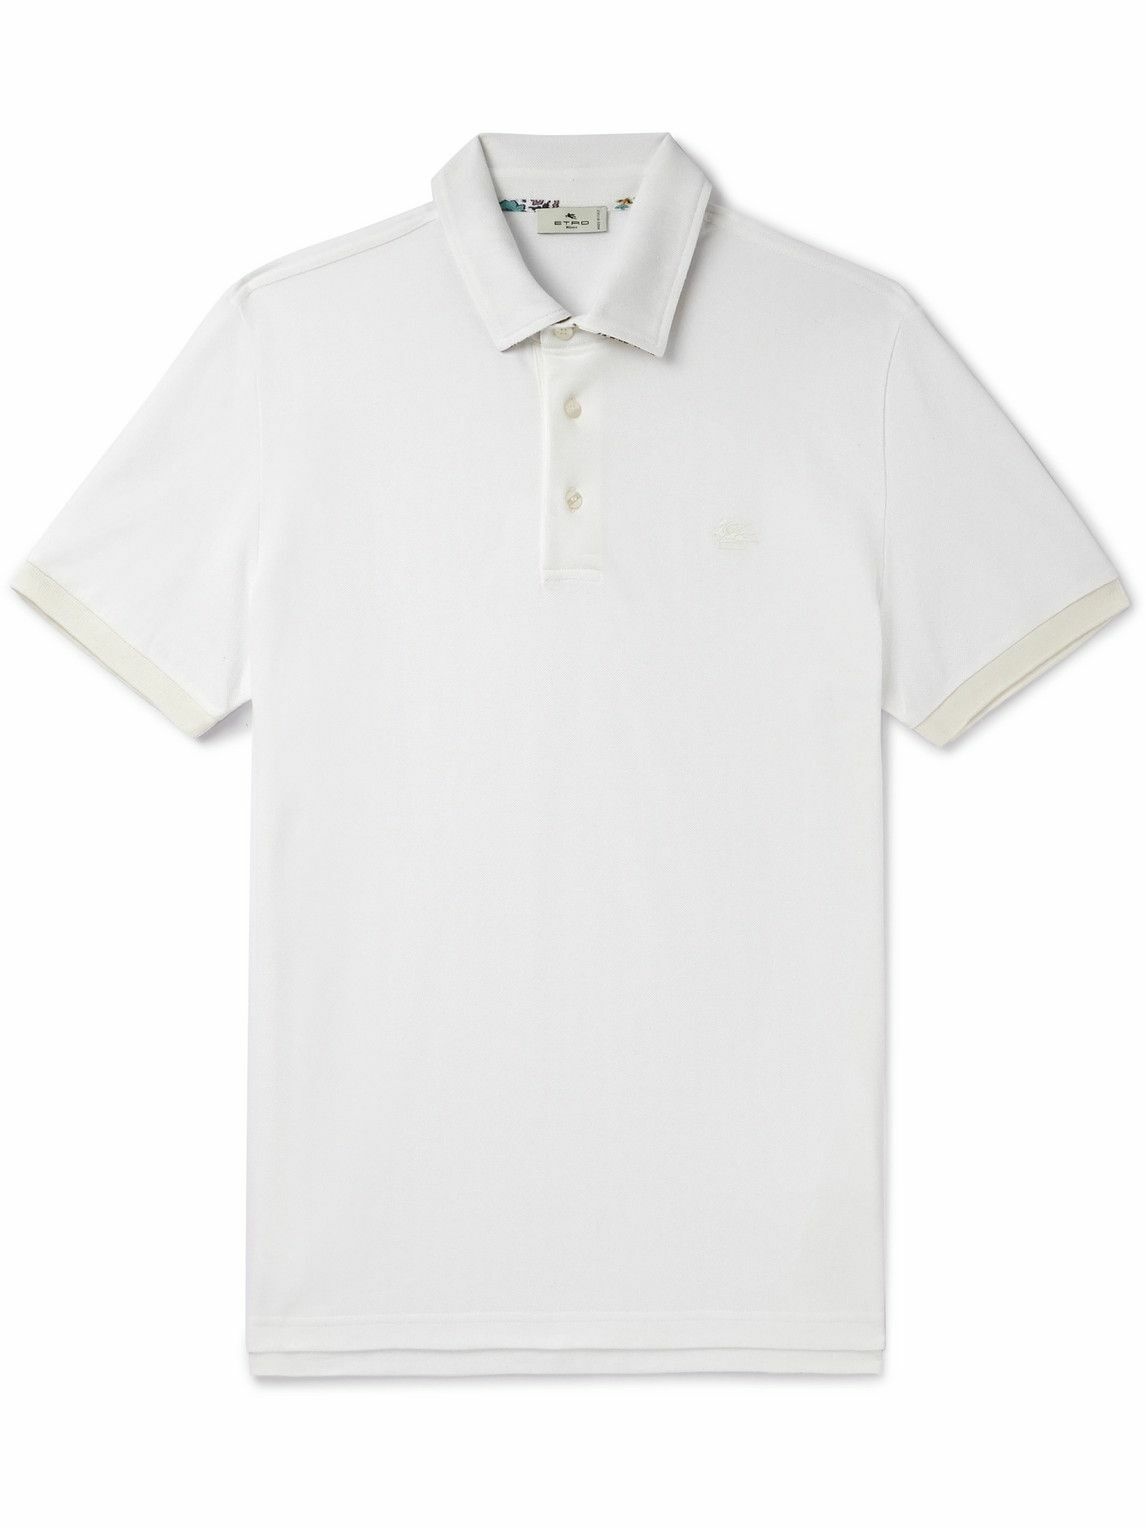 Photo: Etro - Logo-Embroidered Cotton-Piqué Polo Shirt - White